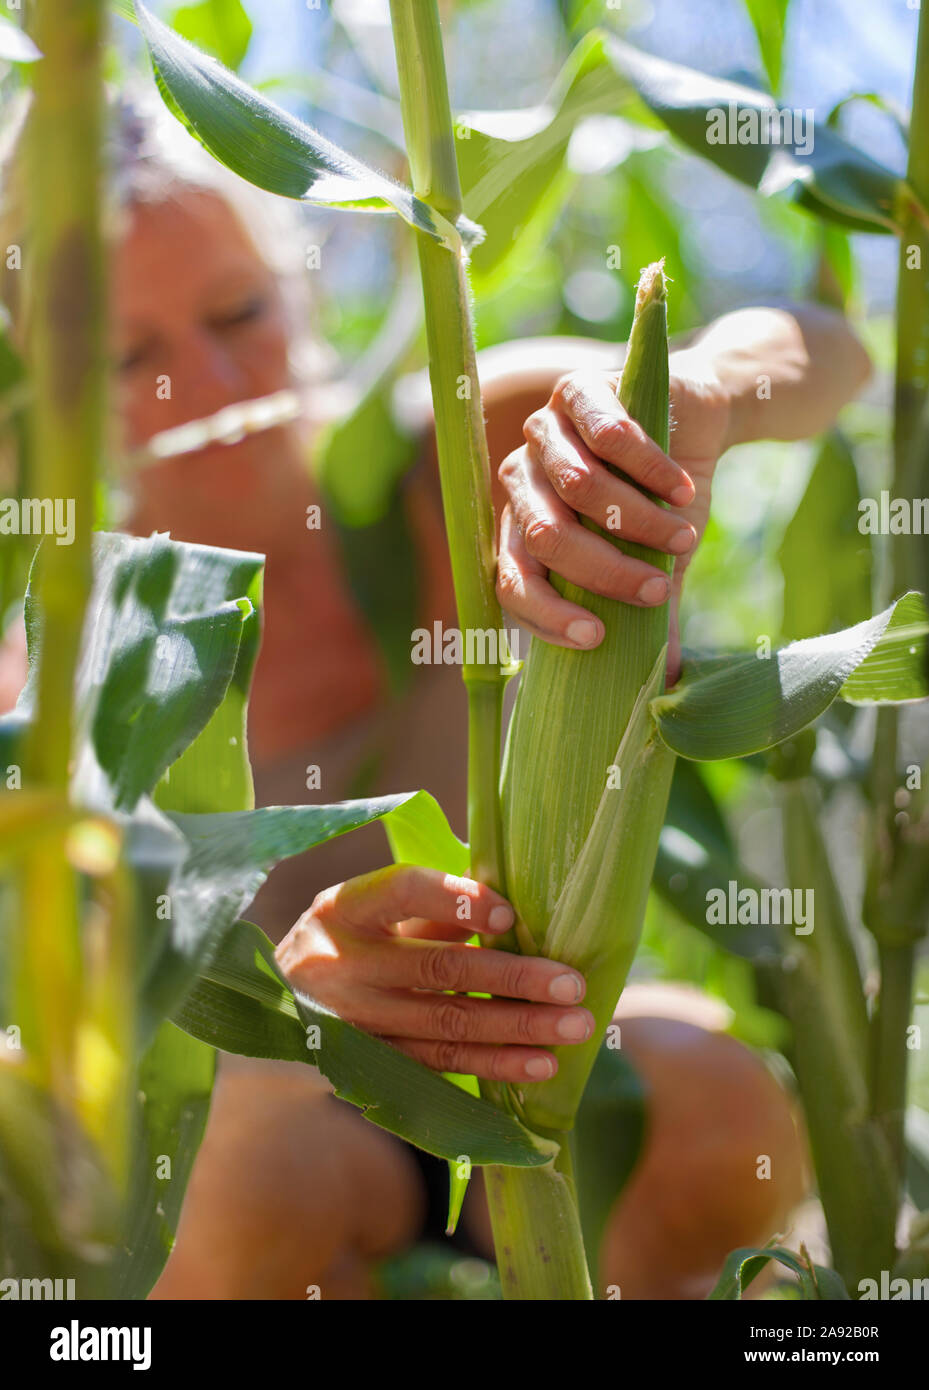 Woman harvesting corn Stock Photo